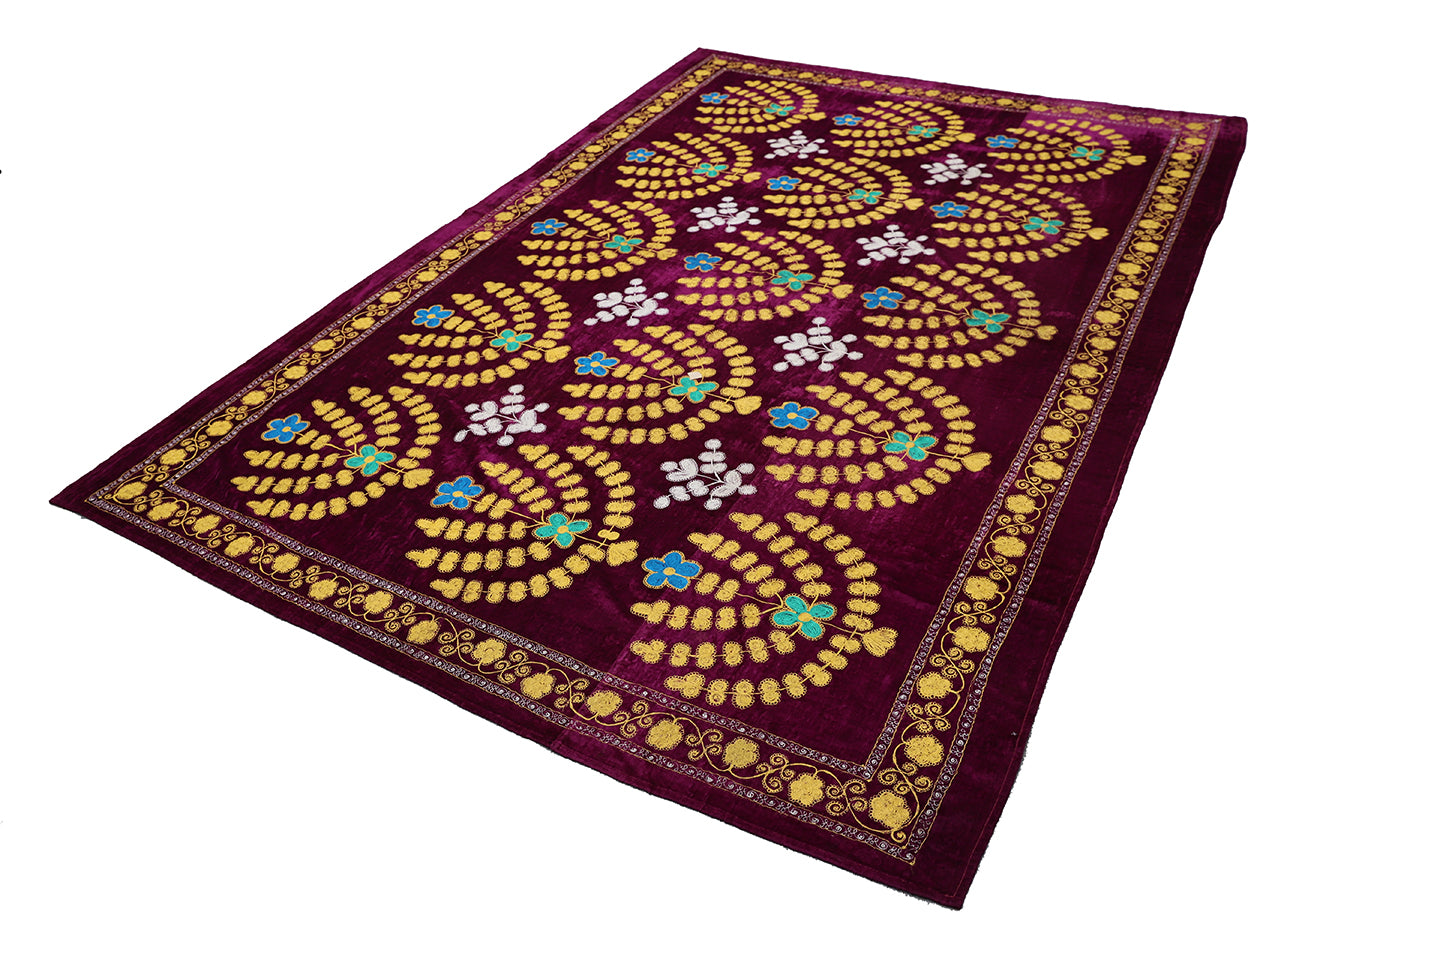 8'x10' Finely stitched Uzbek Suzani Textile Boasting a Vibrant Magenta Velvet Backdrop